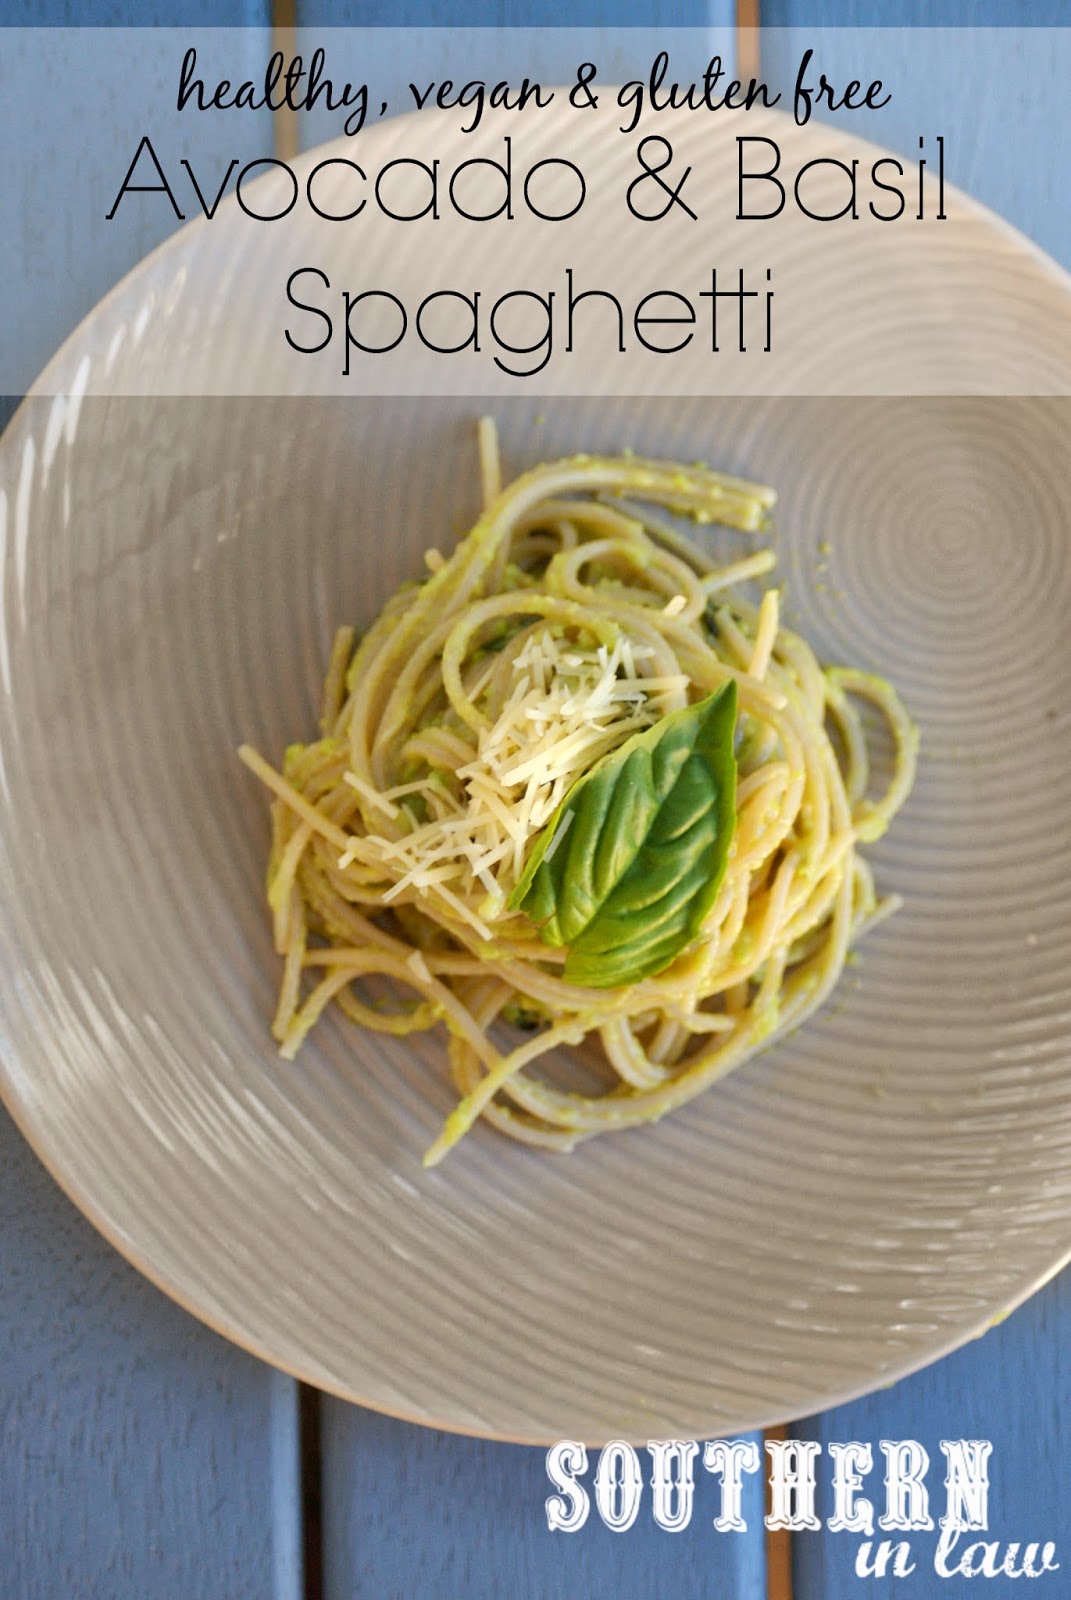 Healthy Avocado and Basil Spaghetti Recipe - low fat, gluten free, sugar free, vegan, clean eating friendly